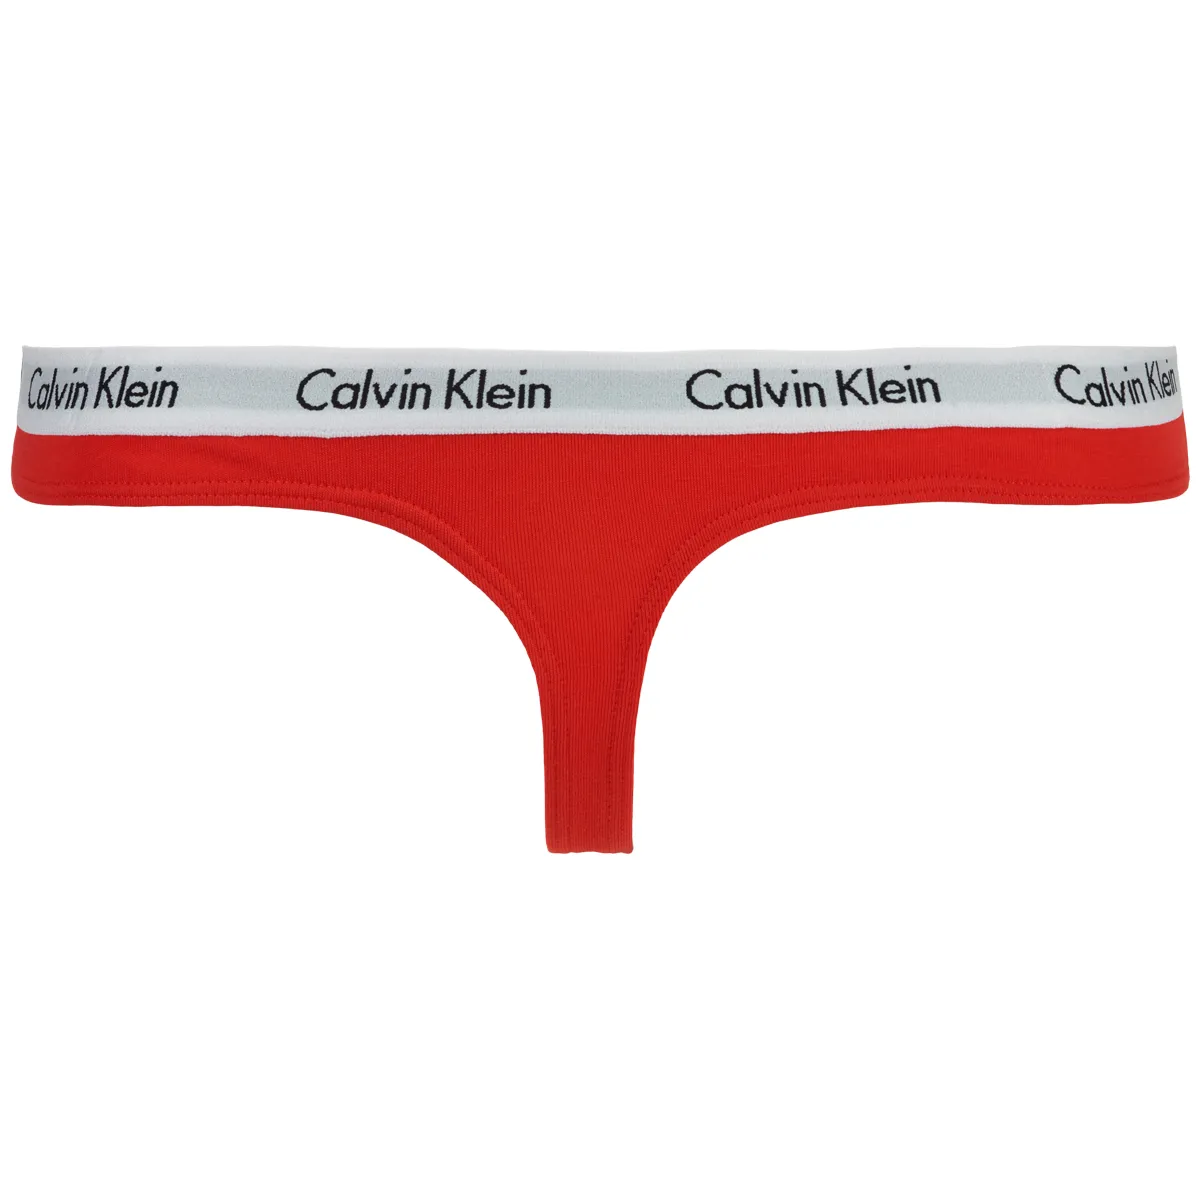 Anoi lovgivning tæmme Calvin Klein • CALVIN KLEIN STRING D1617E XM9 • Pris kr. 135